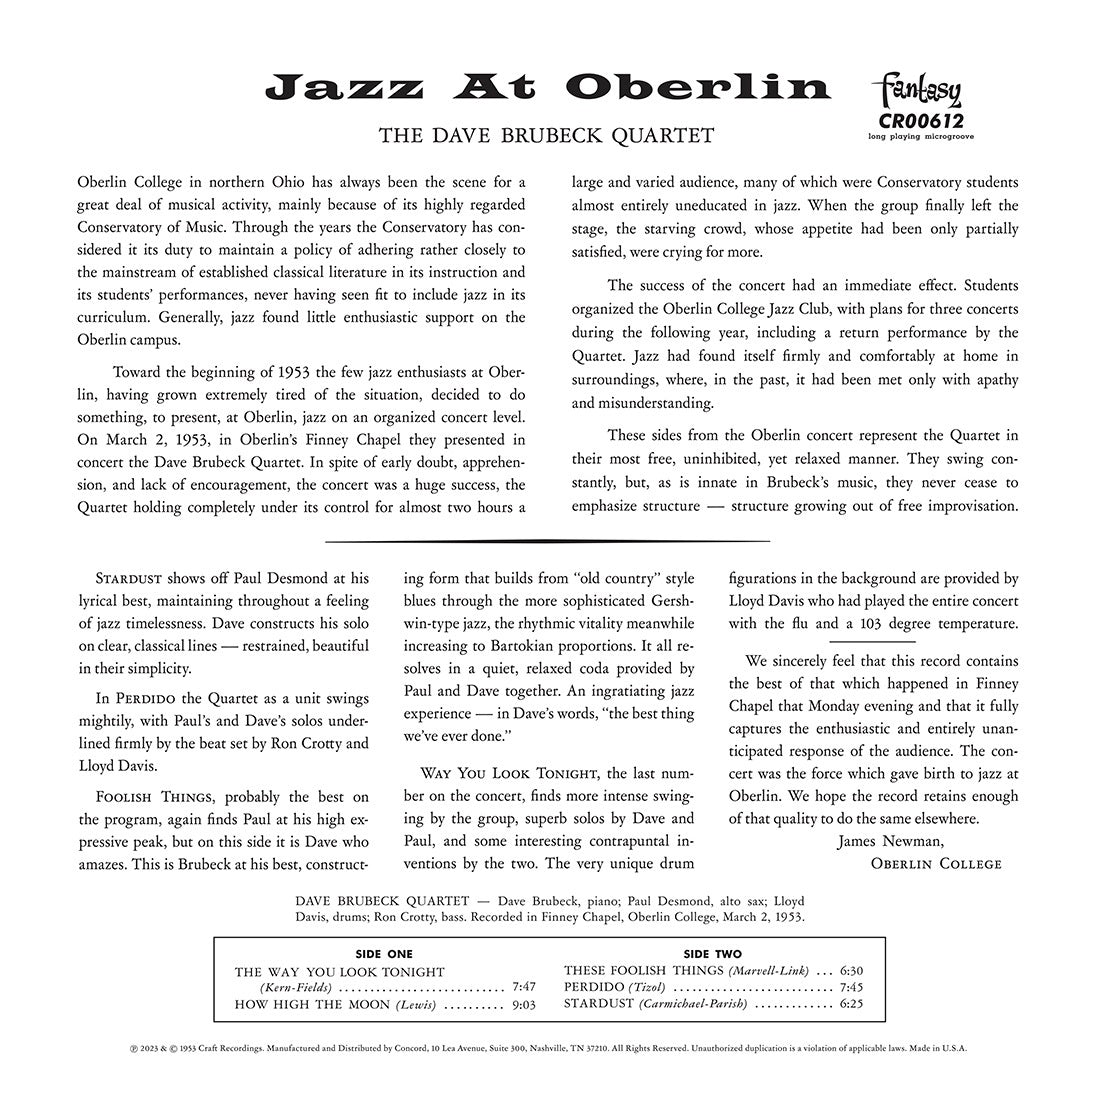 The Dave Brubeck Quartet - Jazz at Oberlin - OJC LP